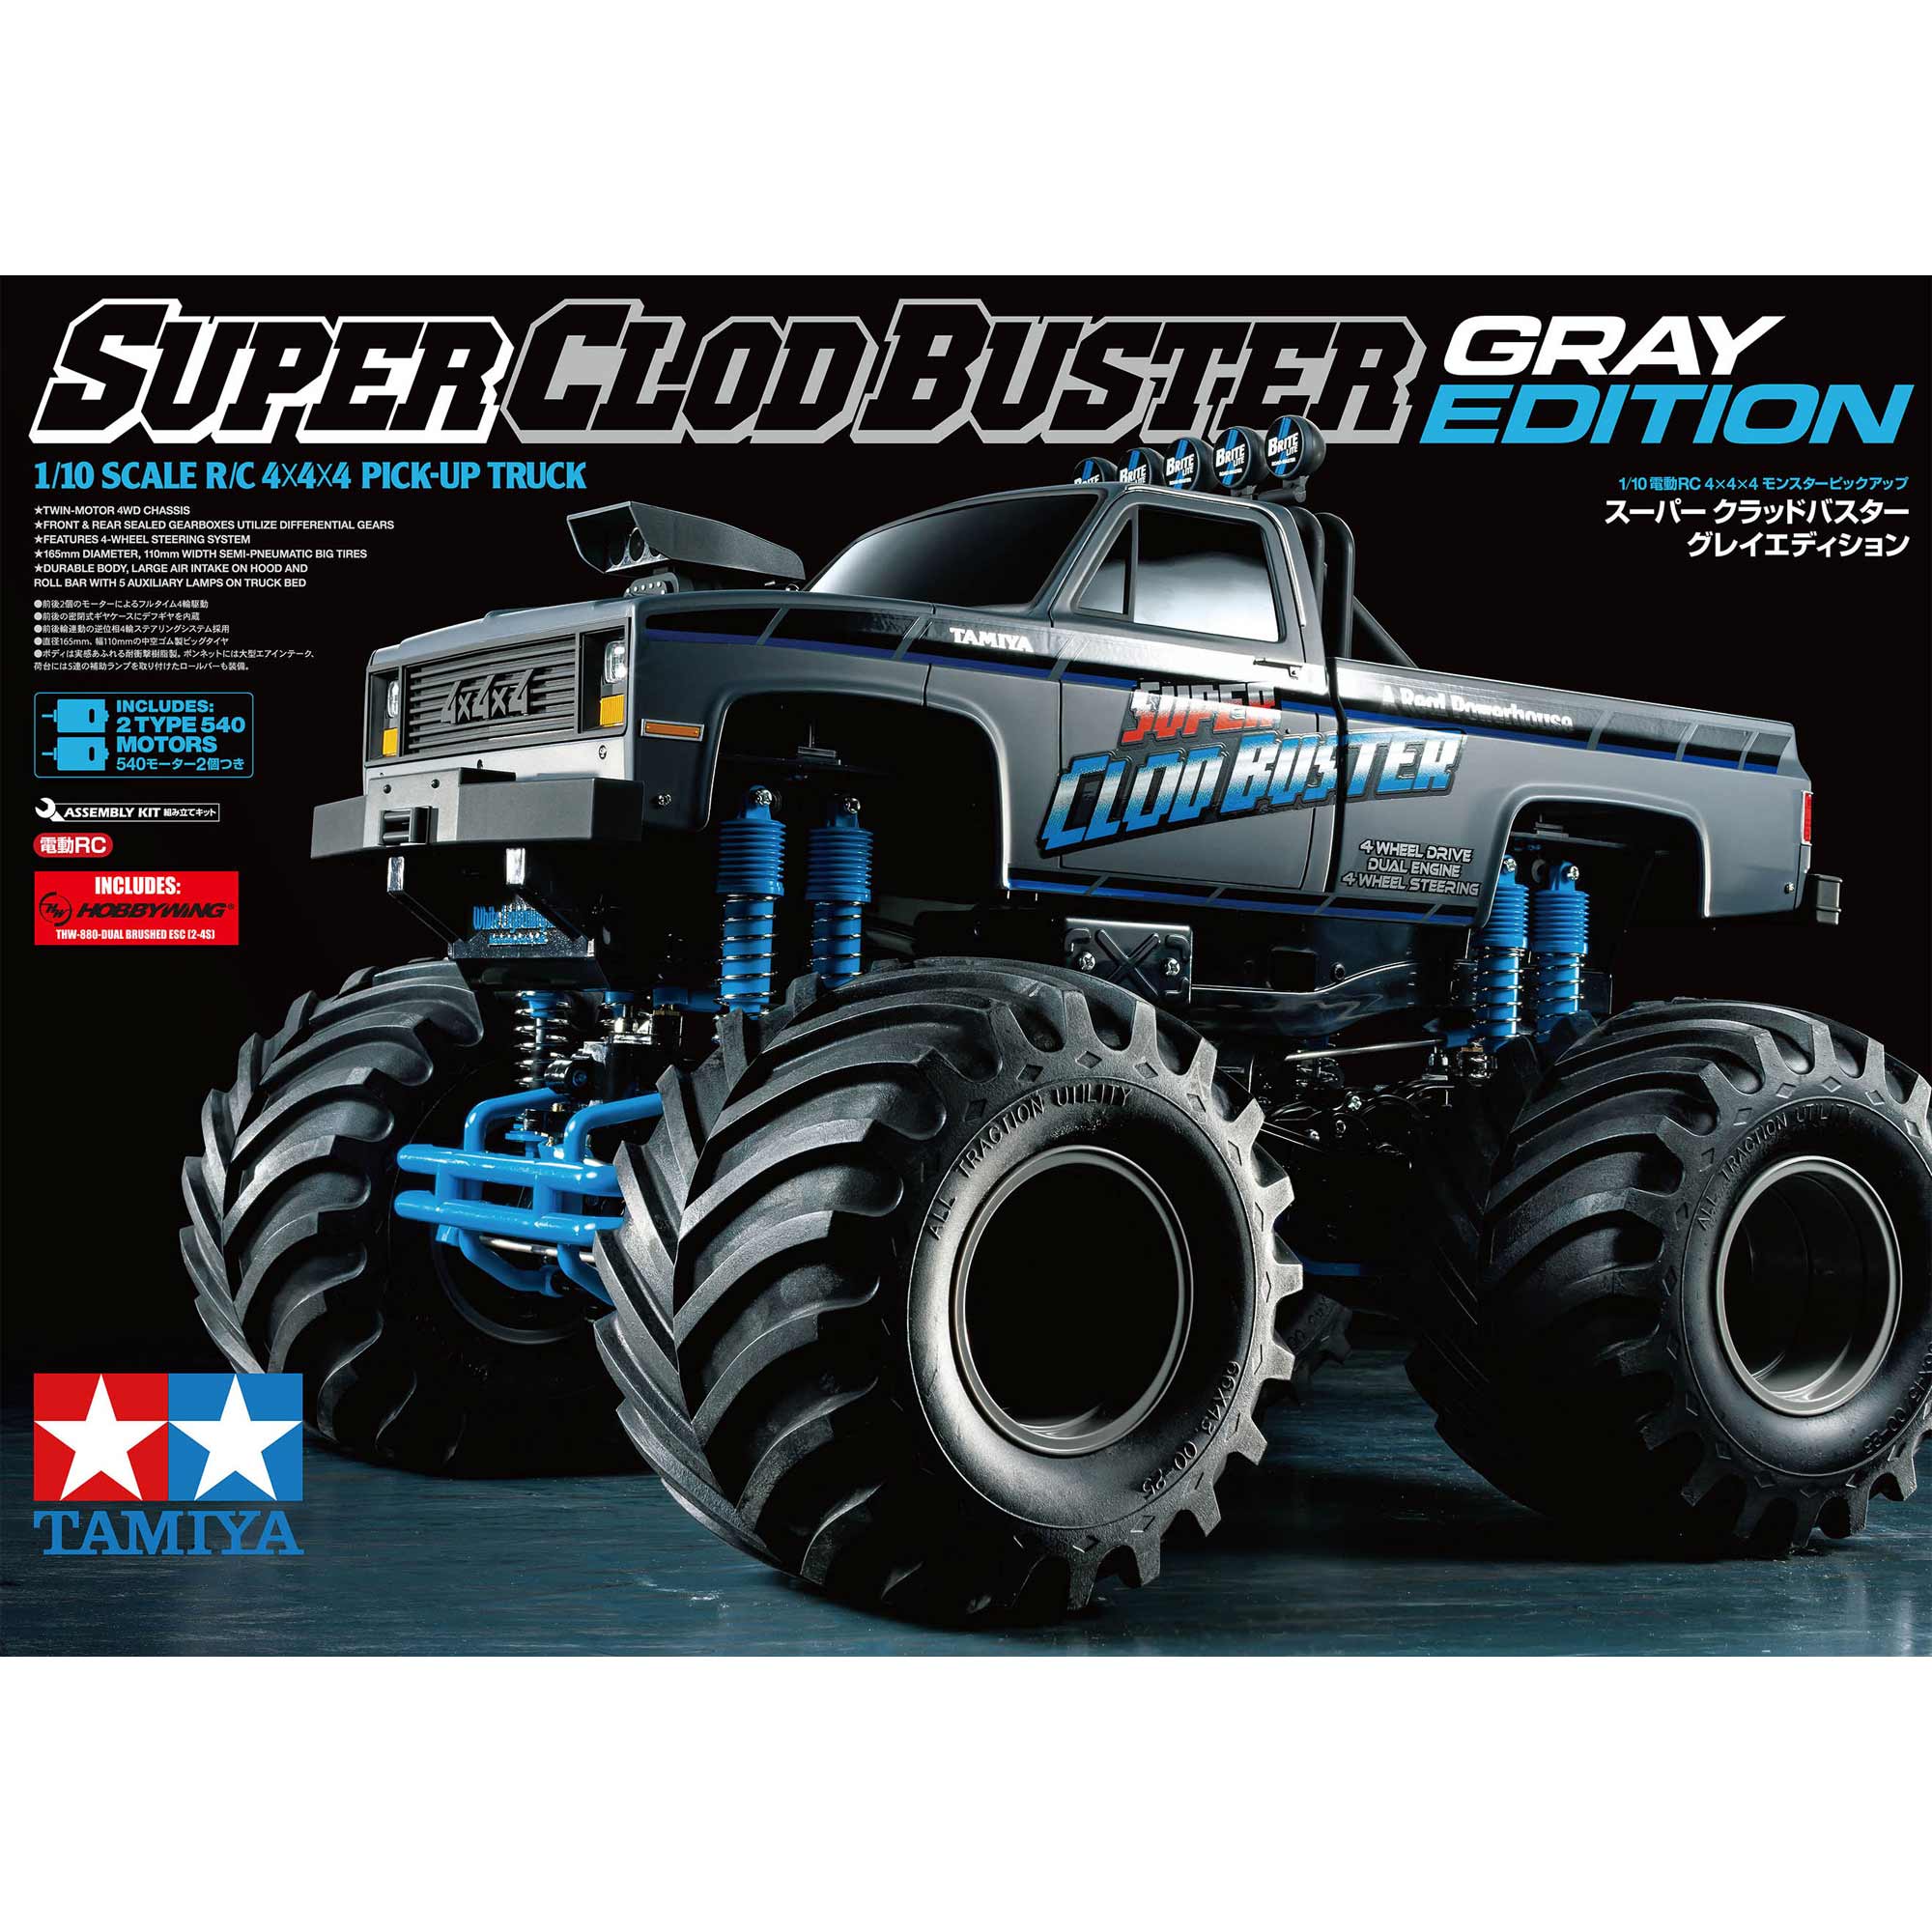 Tamiya 1/10 Super Clod Buster 4X4 Monster Truck Kit, Grey (Limited Edition)